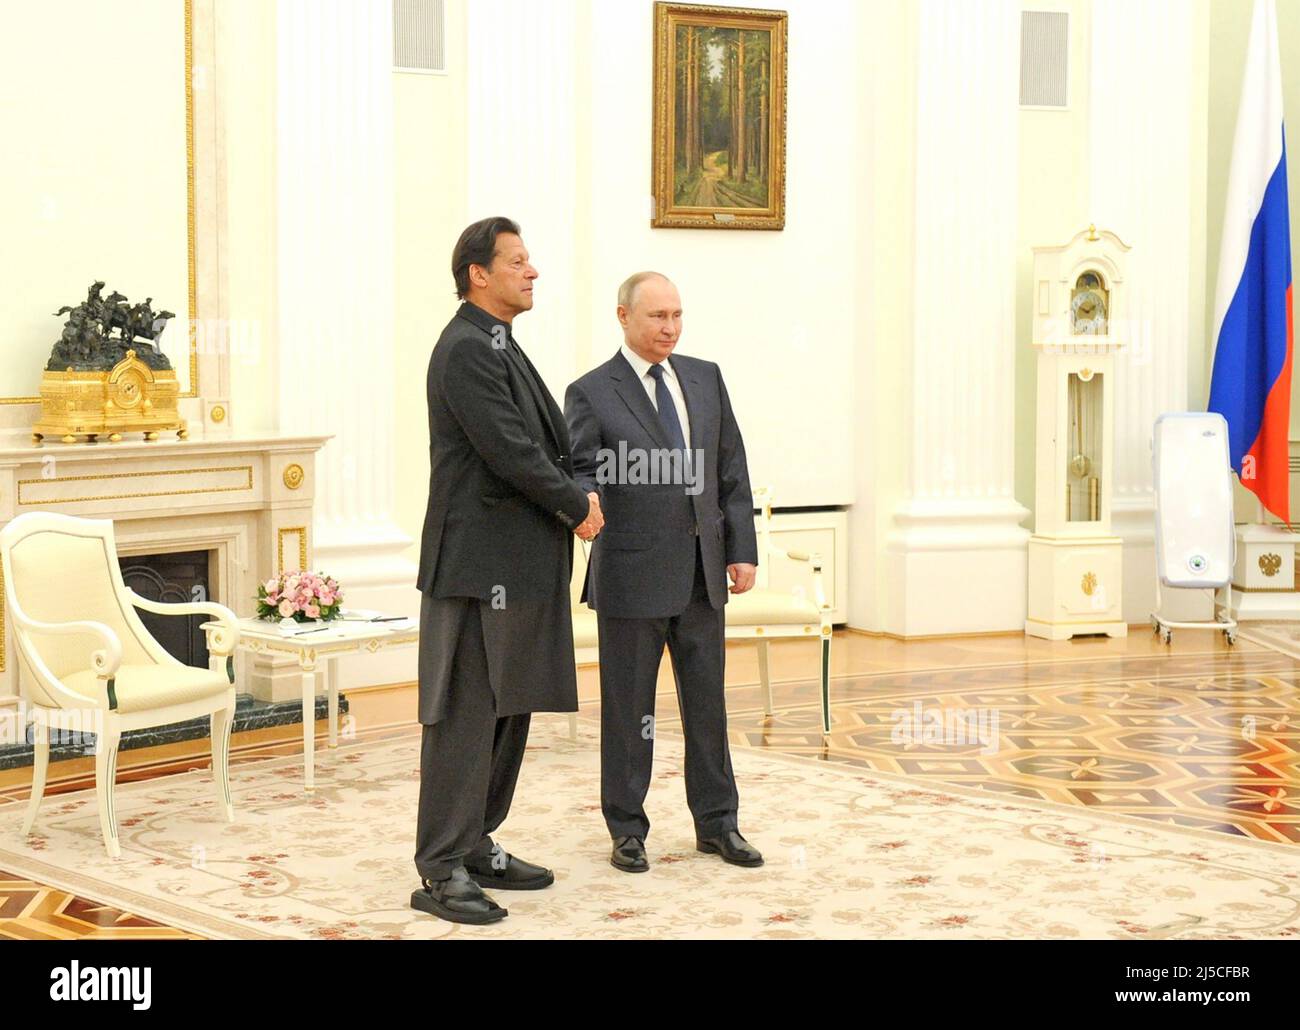 VLADIMIR PUTIN, Russian President, with Imran Khan President of Pakistan, in Moscow, 24 February 20223. Photo: Kremlin.rtu Stock Photo